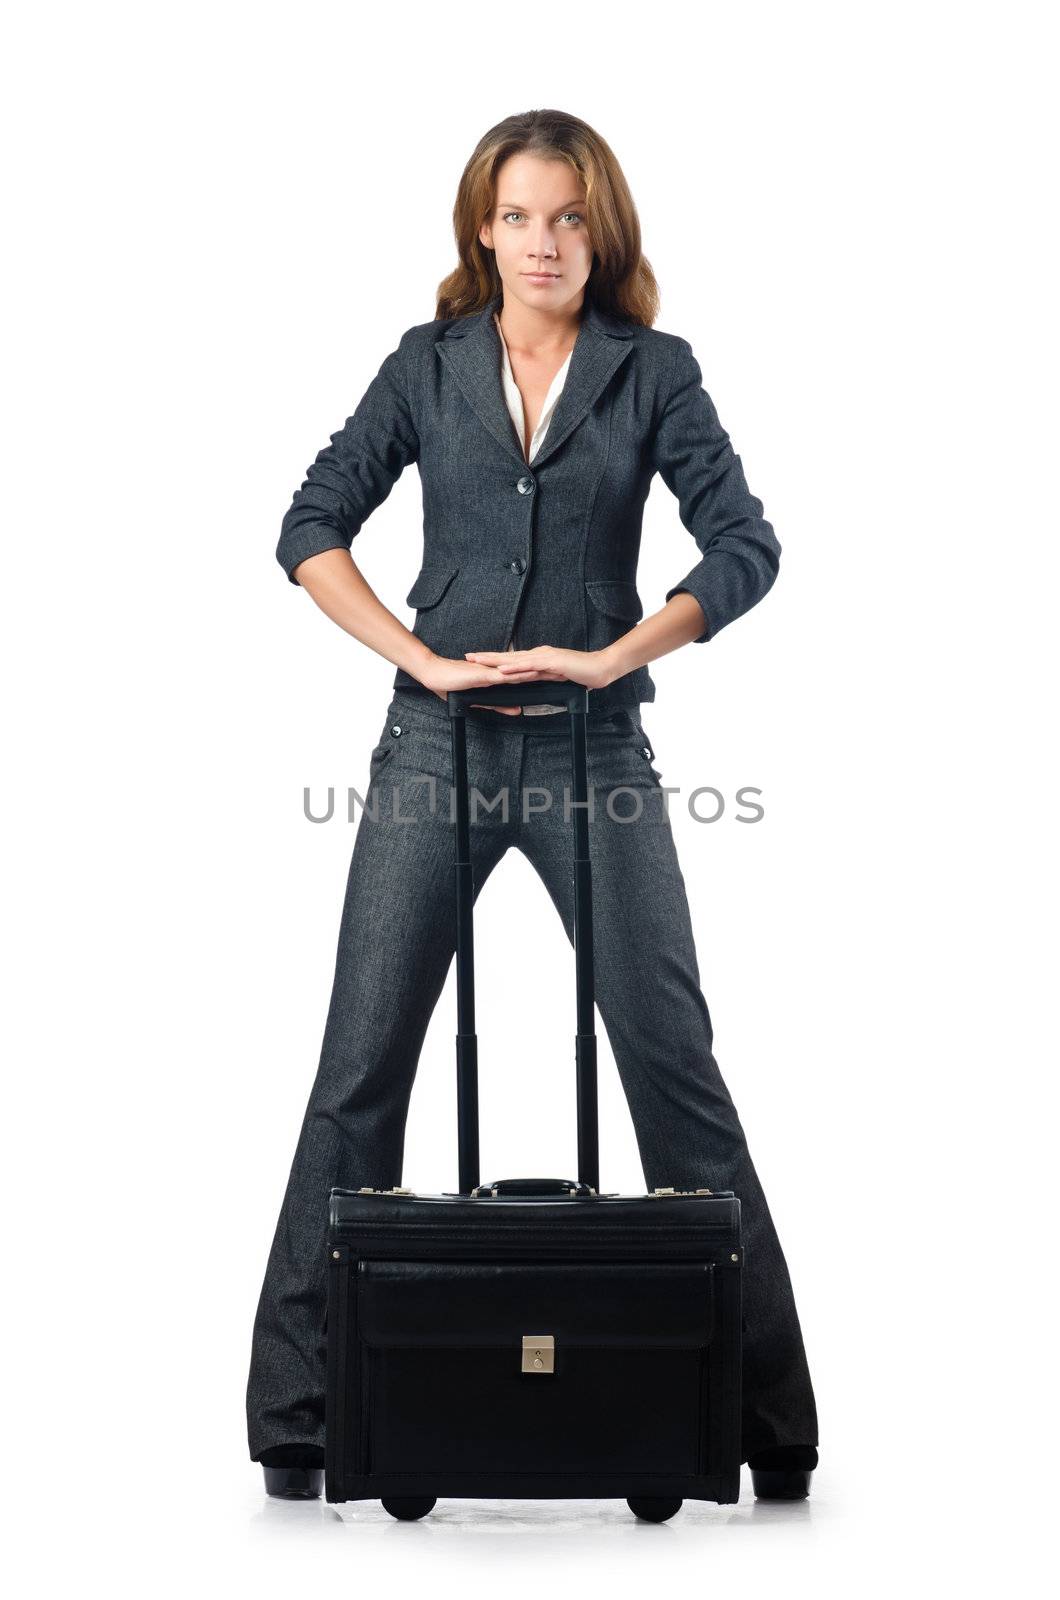 Businesswoman with travel case on white by Elnur